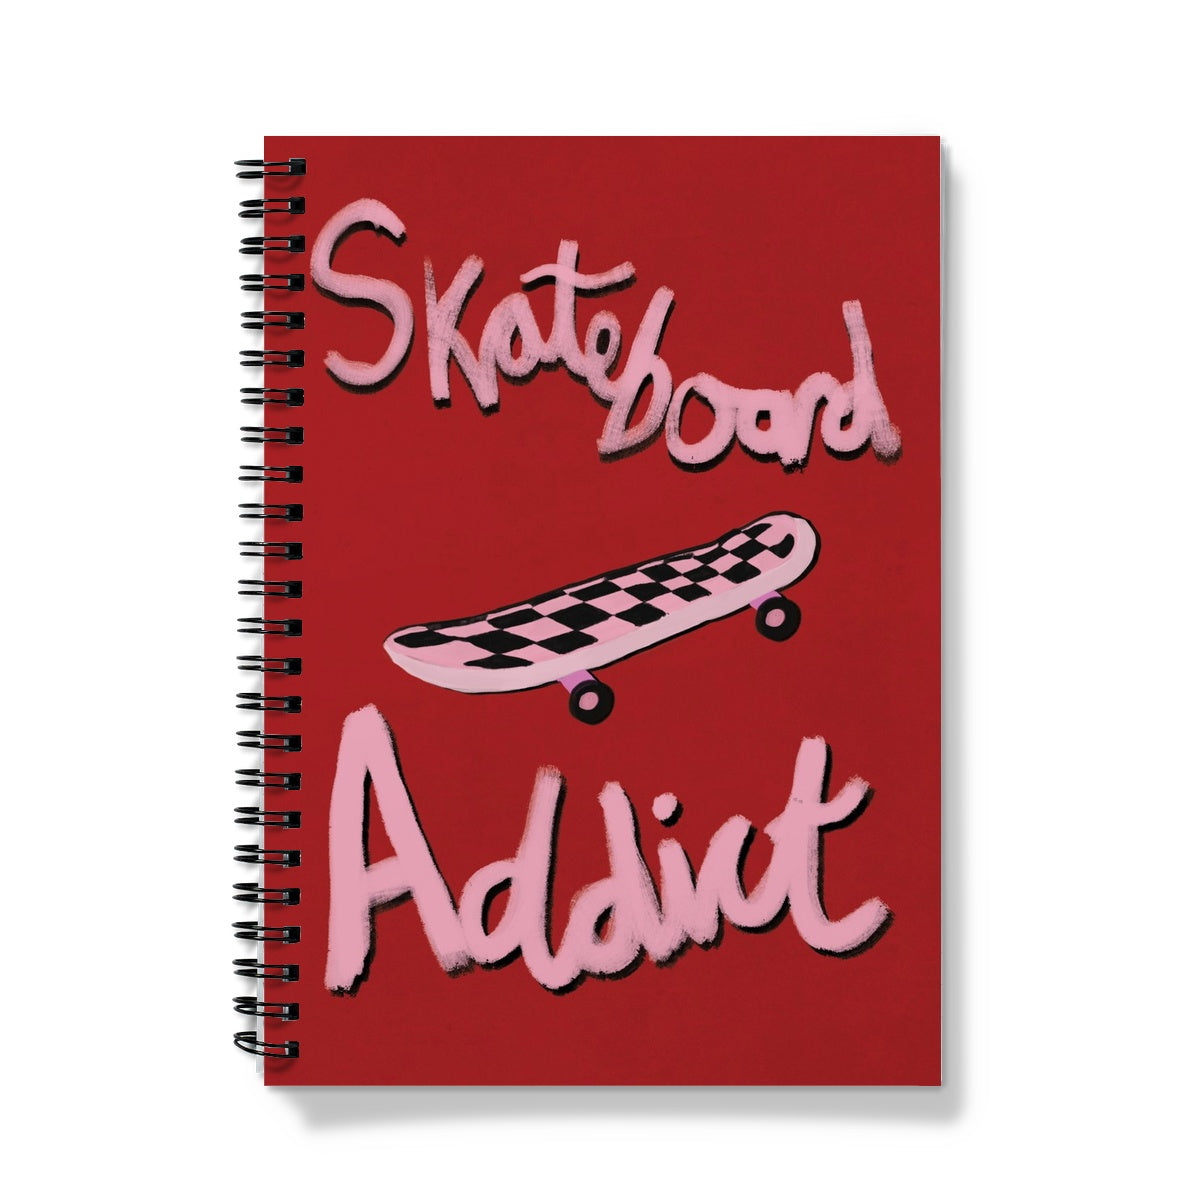 Skateboard Addict - Red, Pink Notebook